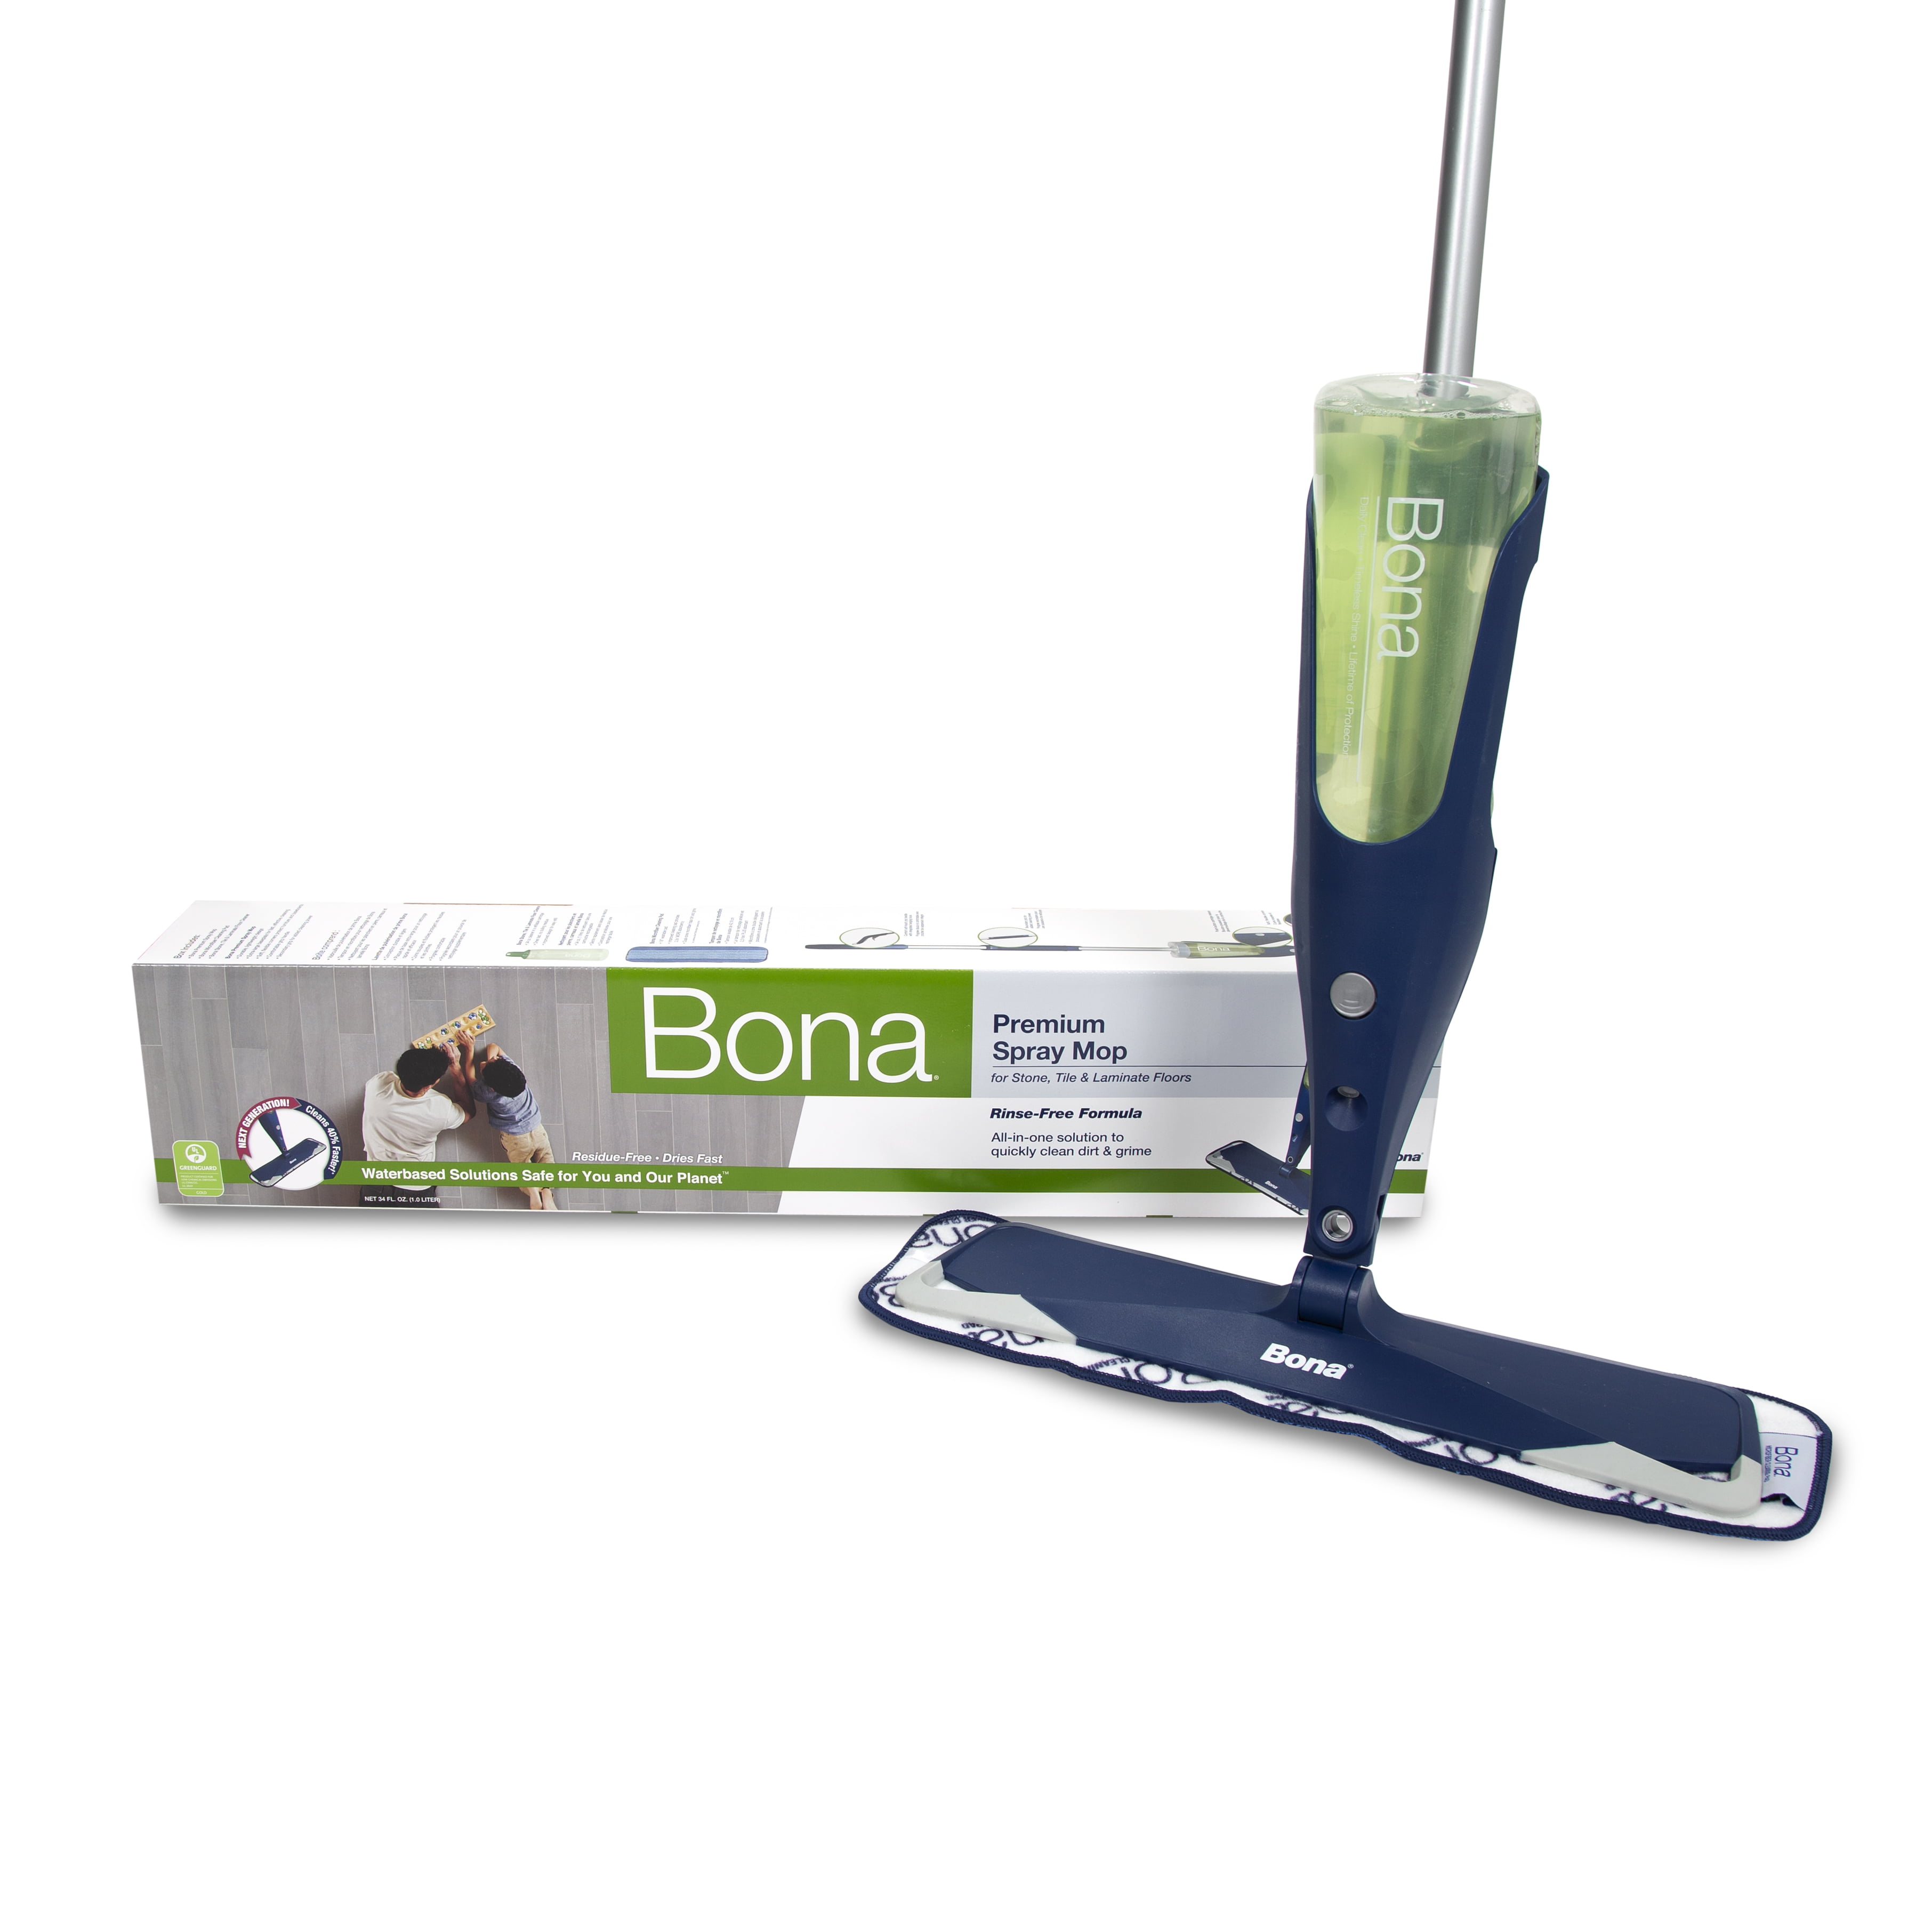 Bona Premium Spray Mop For Hard Surface, Bona Hardwood Floor Mop With Refillable Cartridge